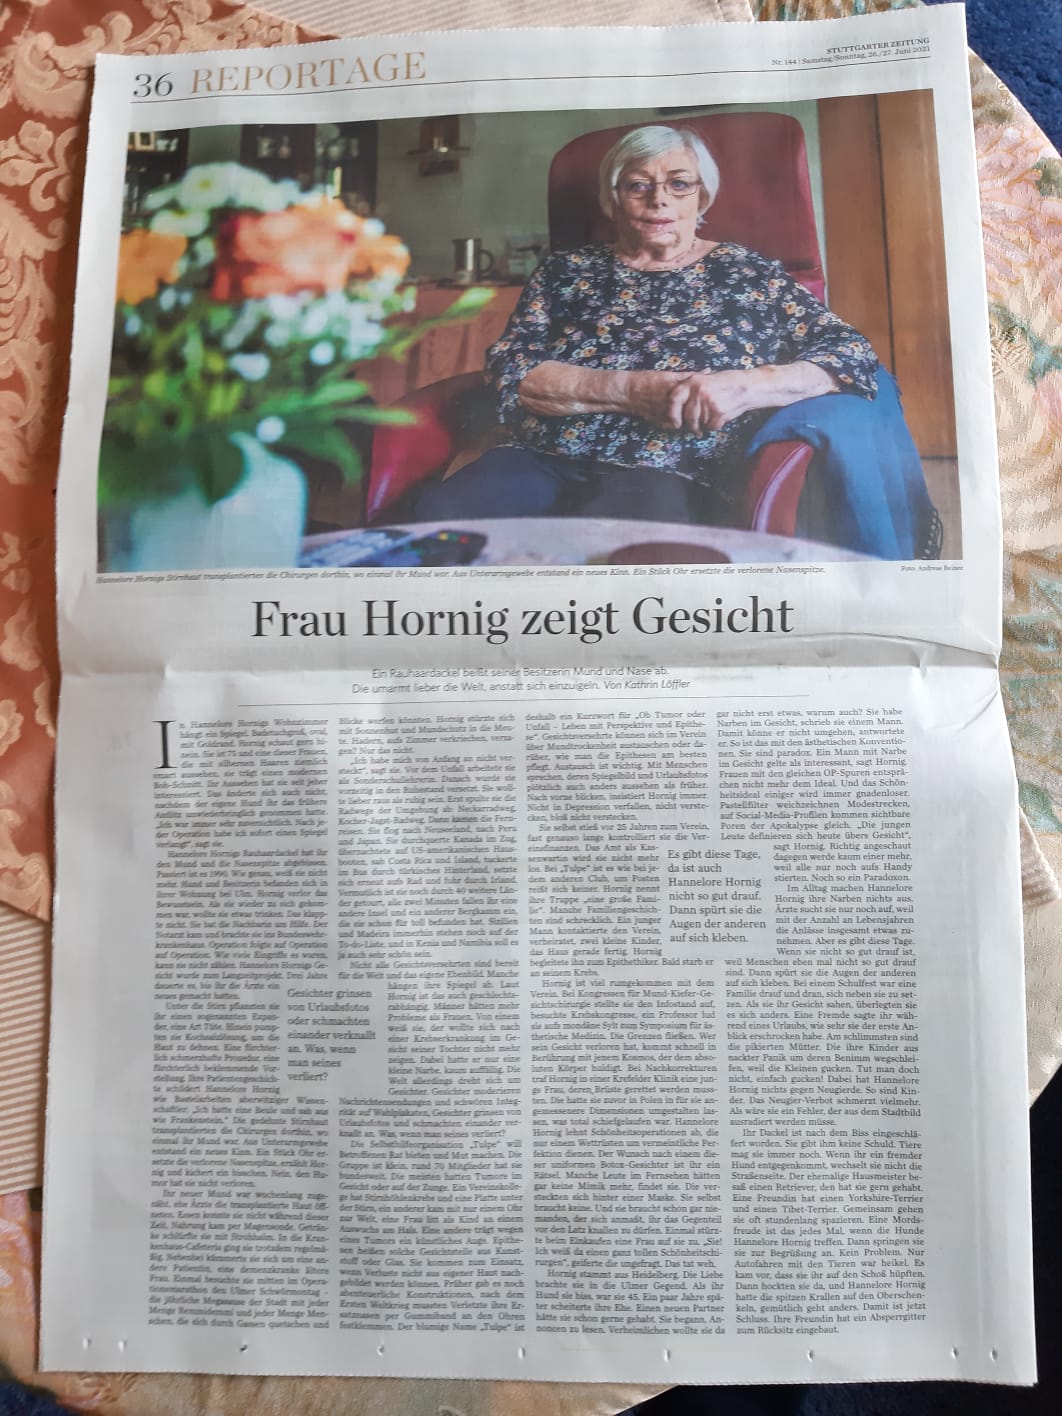 Artikel Stuttgarter Zeitung